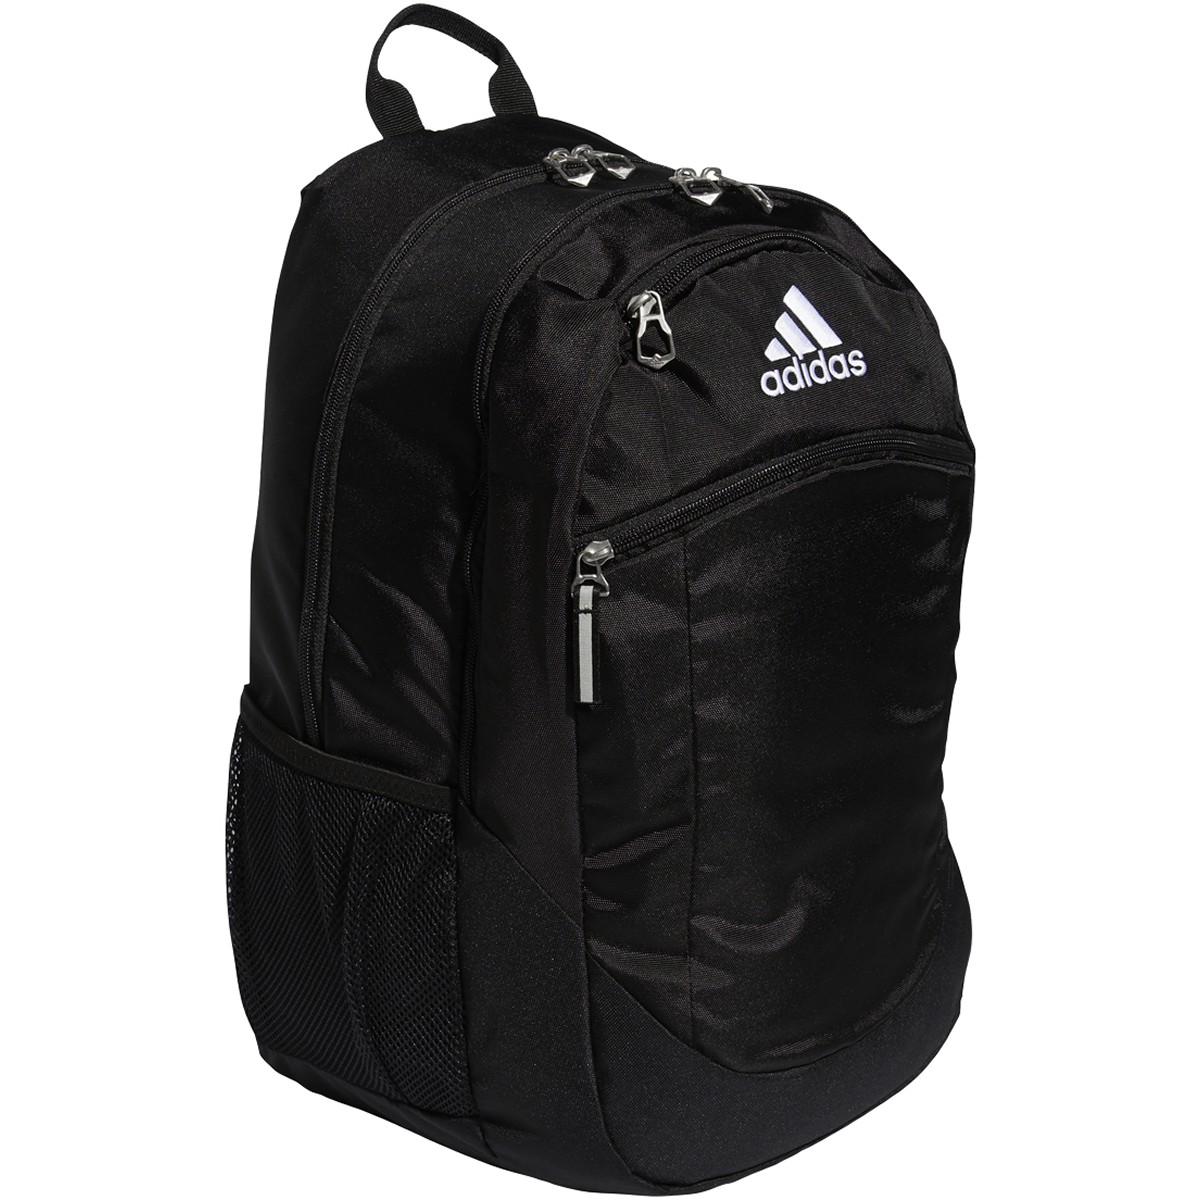 Adidas STRKRIIBKPK - Striker II Team Backpack